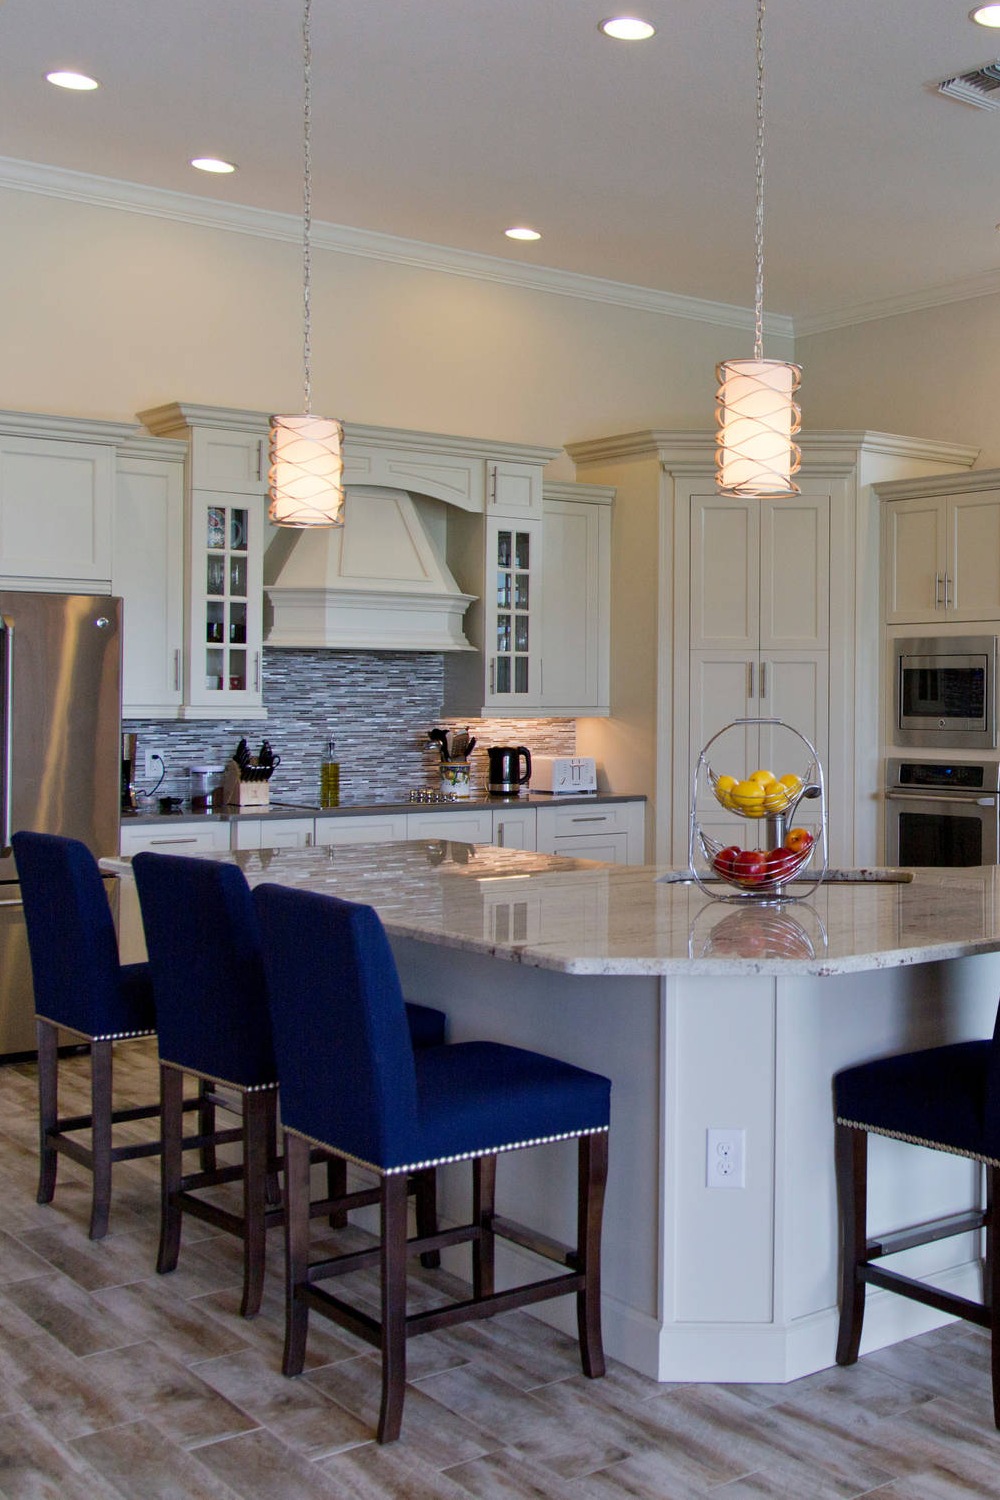 White Cabinets Kitchen With Blue Backsplash Island Countertop Tiles